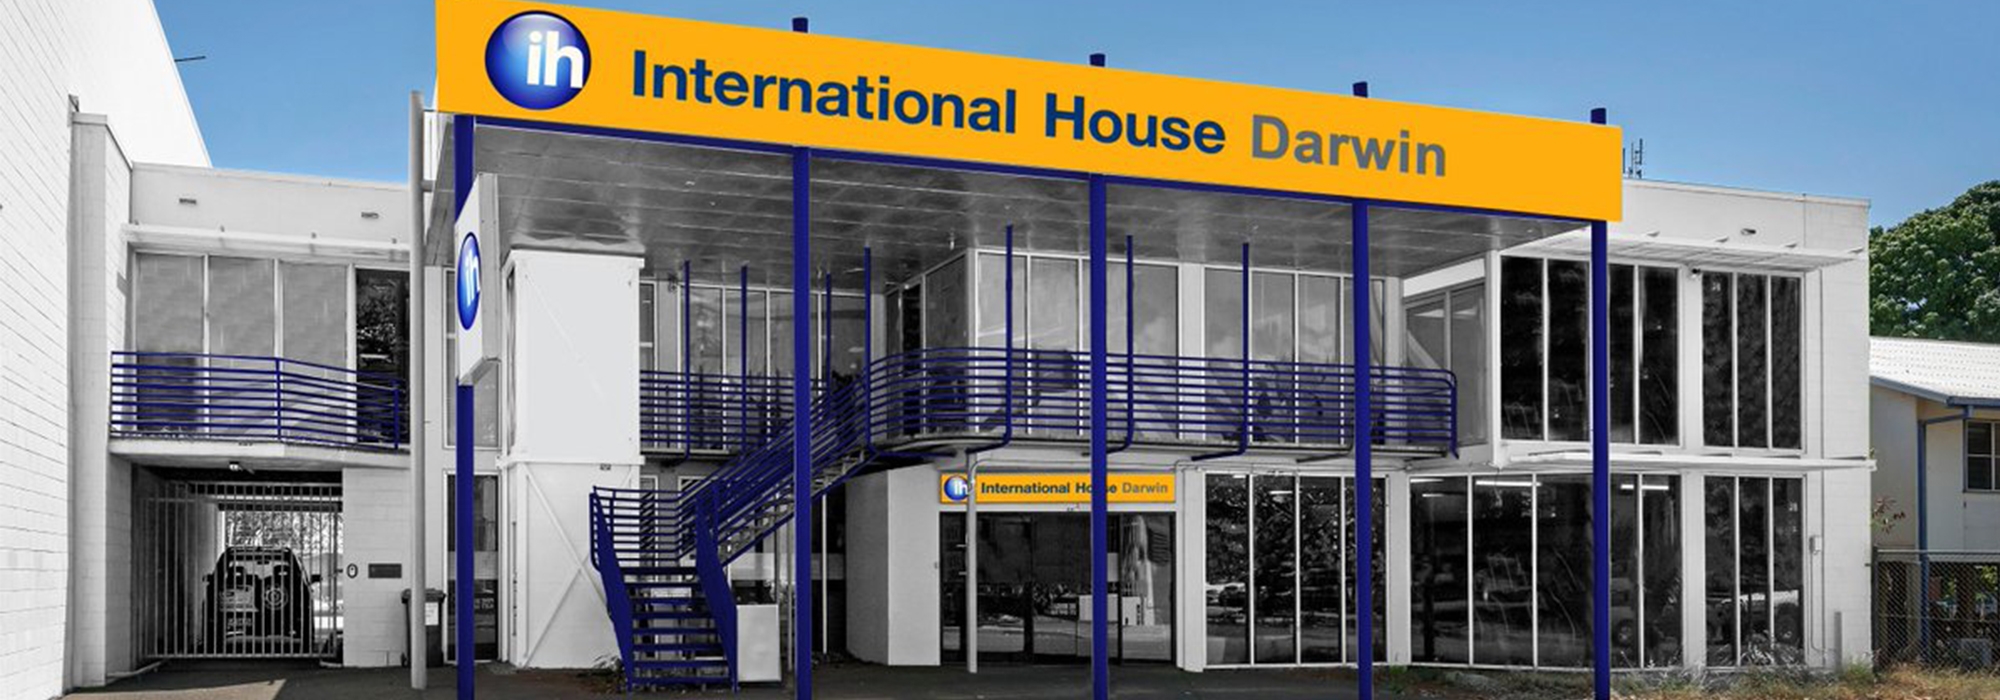 International House Darwin Dil Okulu